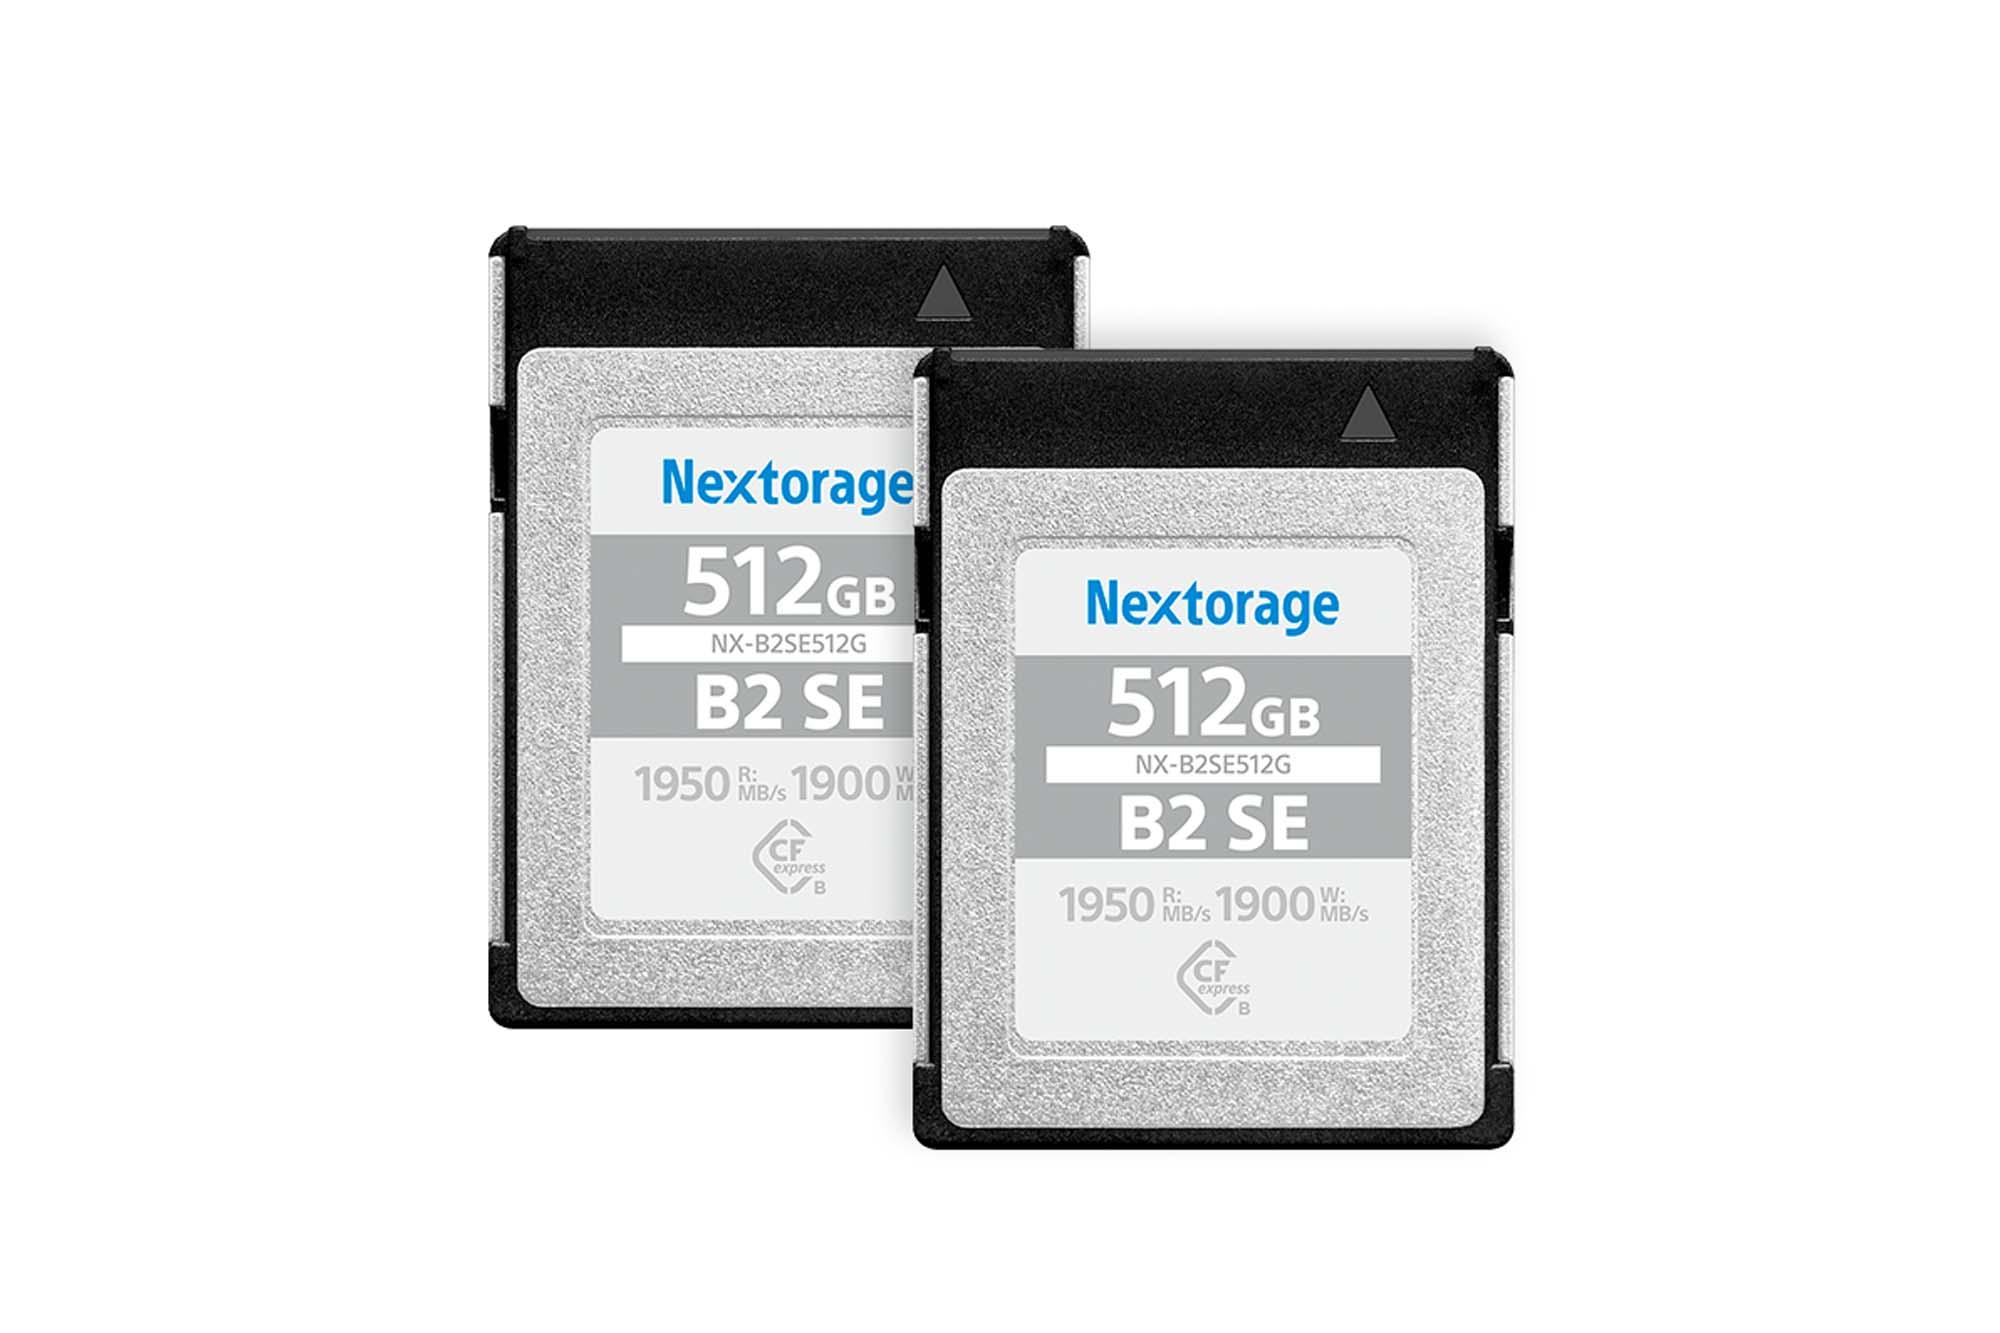 Nextorage、CFexpress Type Bメモリーカード「2P-B2SE512G」を発売〜NX